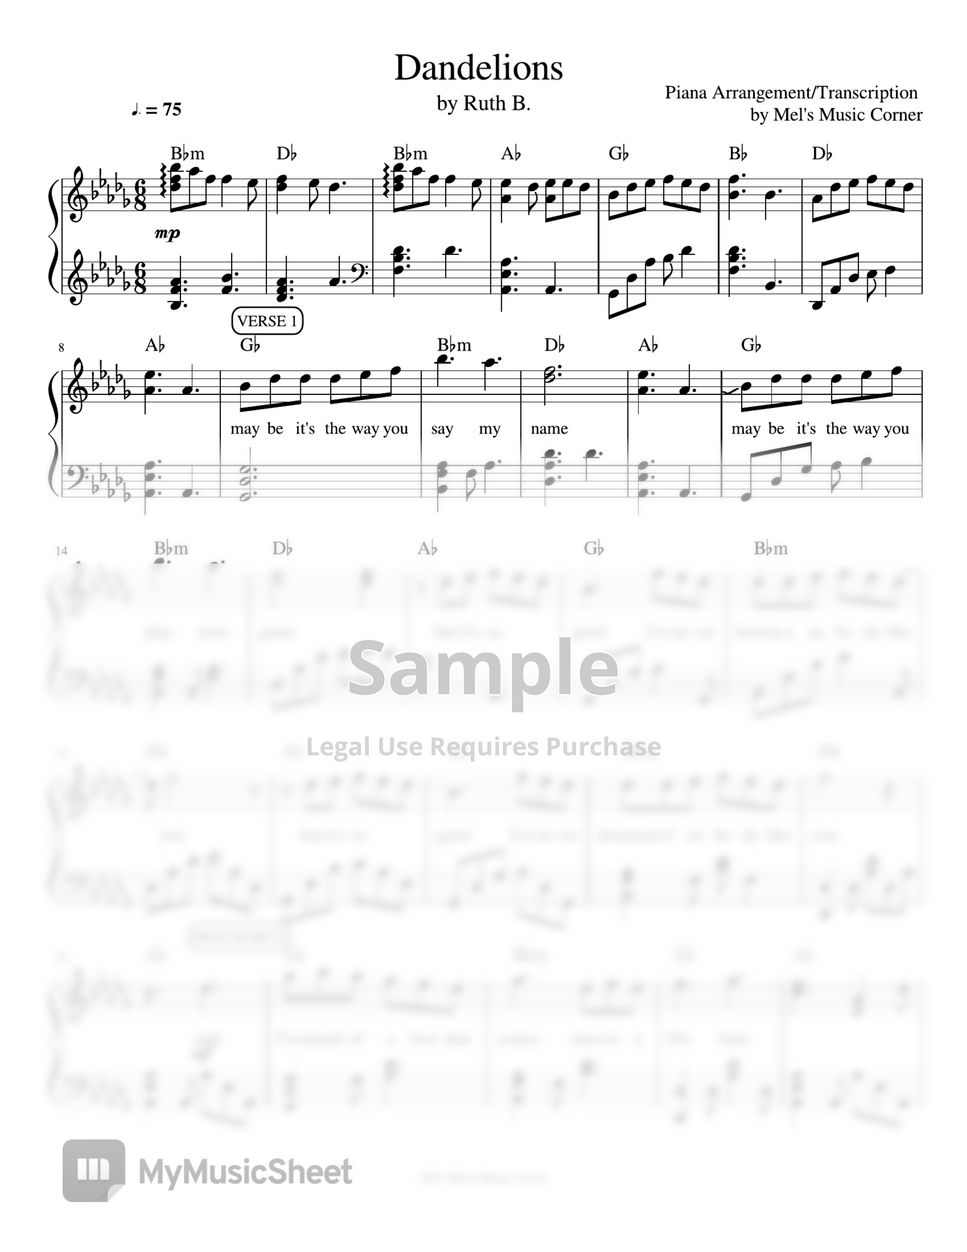 Ruth B. - Dandelions (piano sheet music) by Mel Music Corner